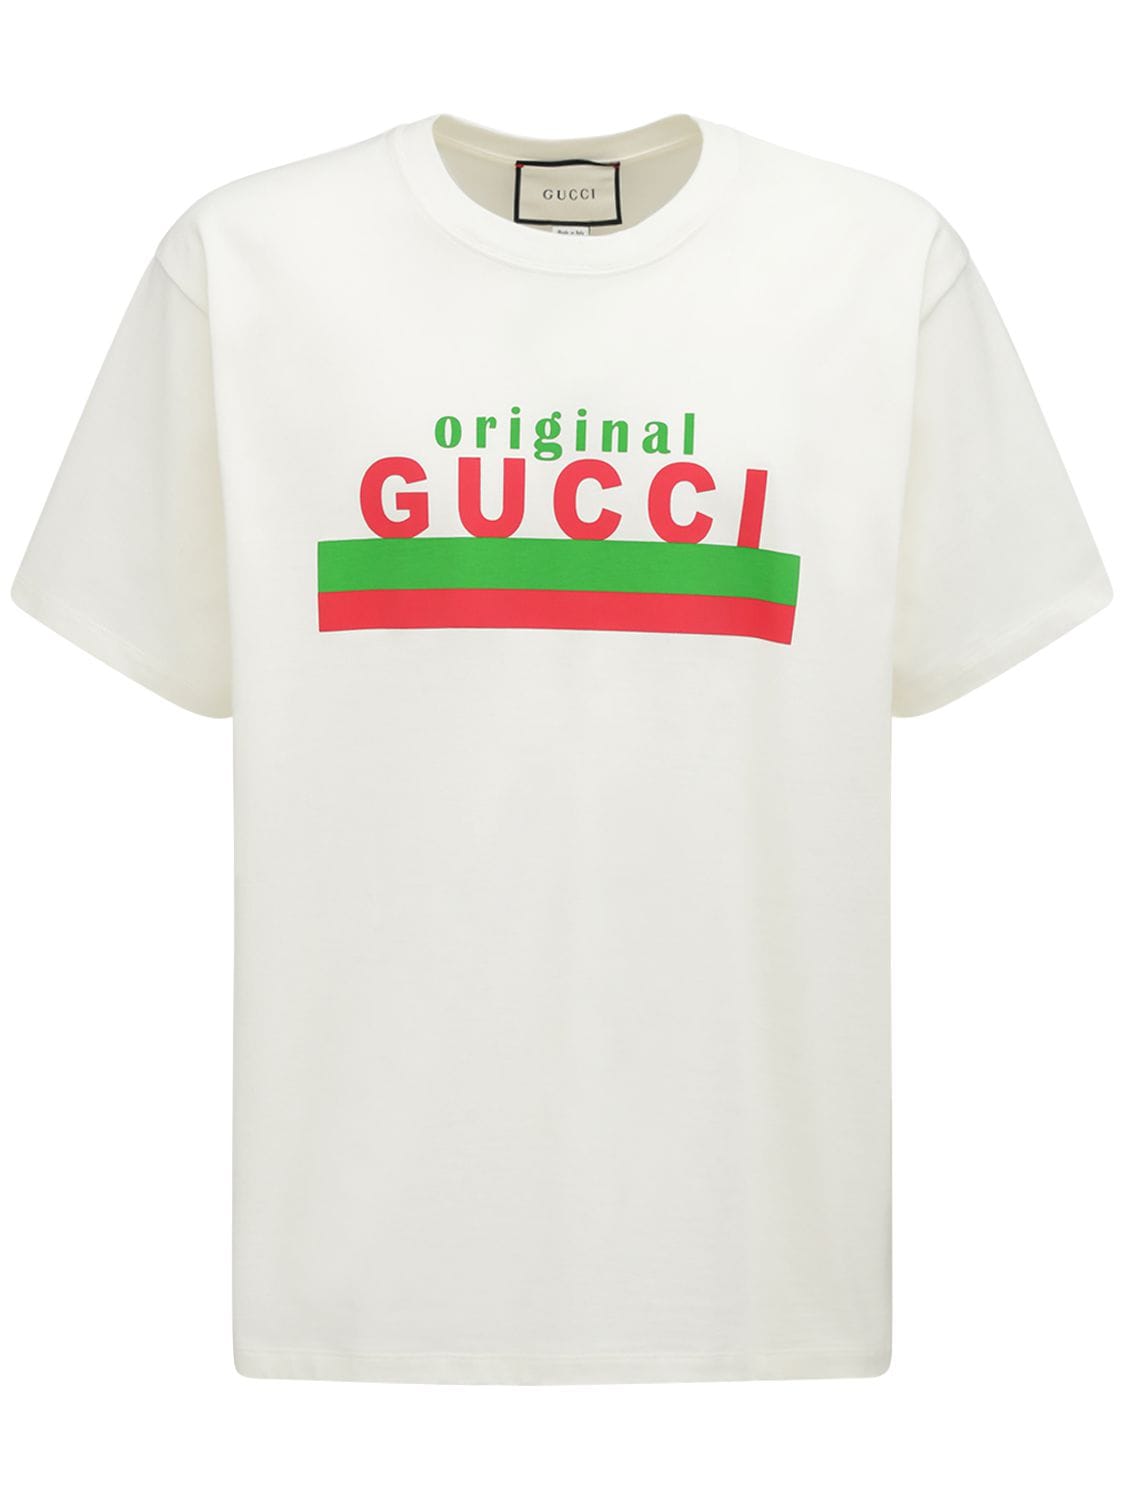 Image of Gucci Original Print Cotton T-shirt